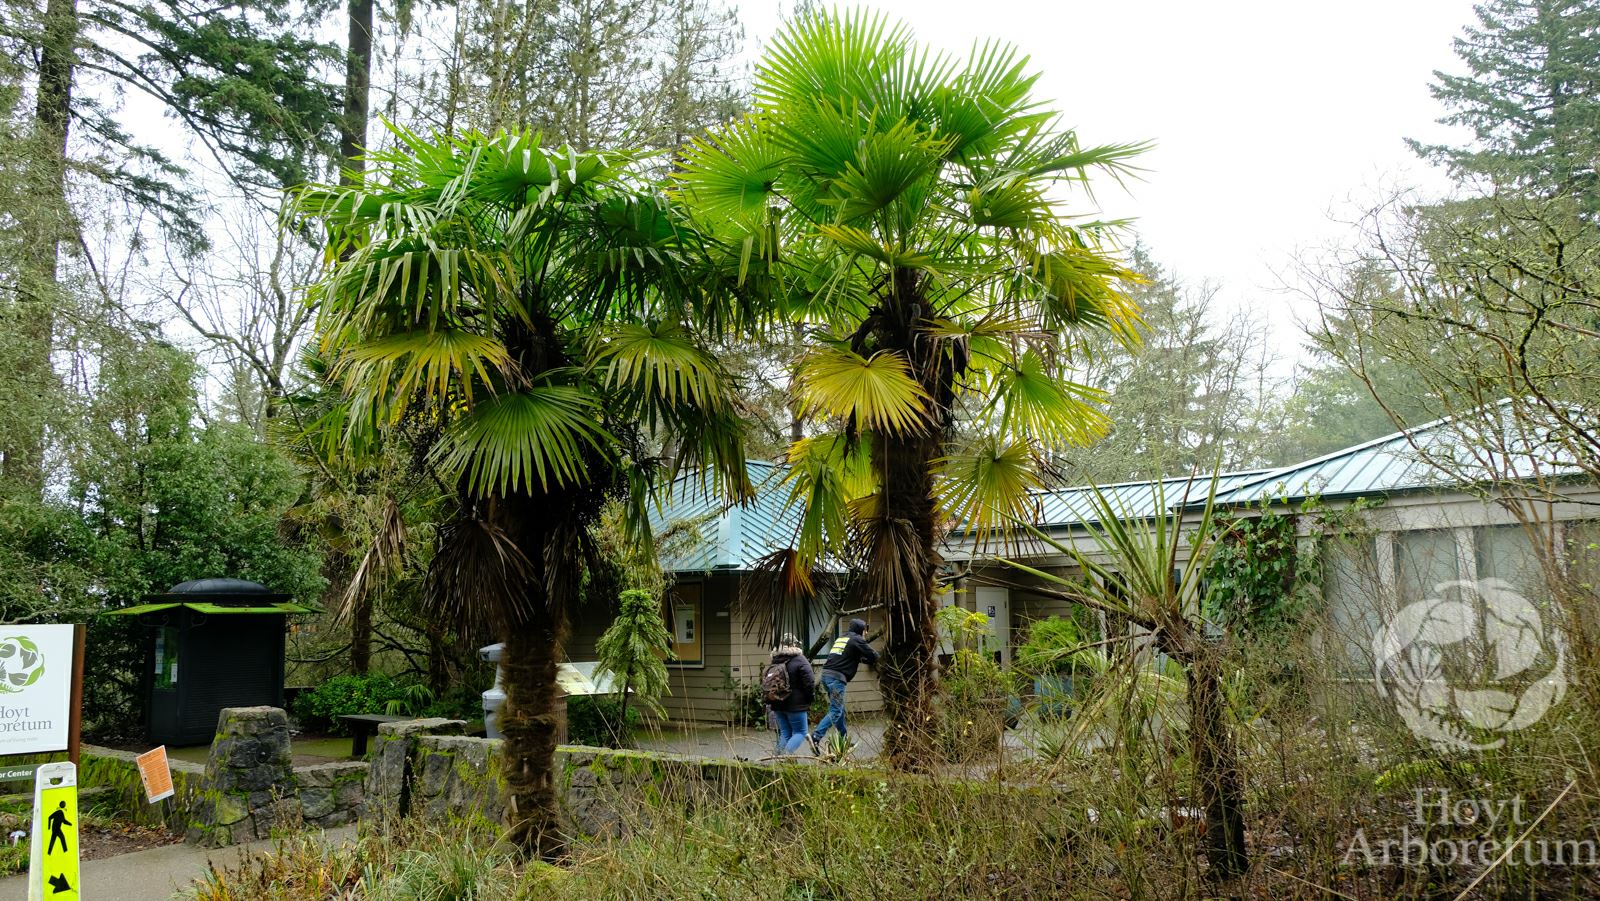 Trachycarpus fortunei - Windmill Palm